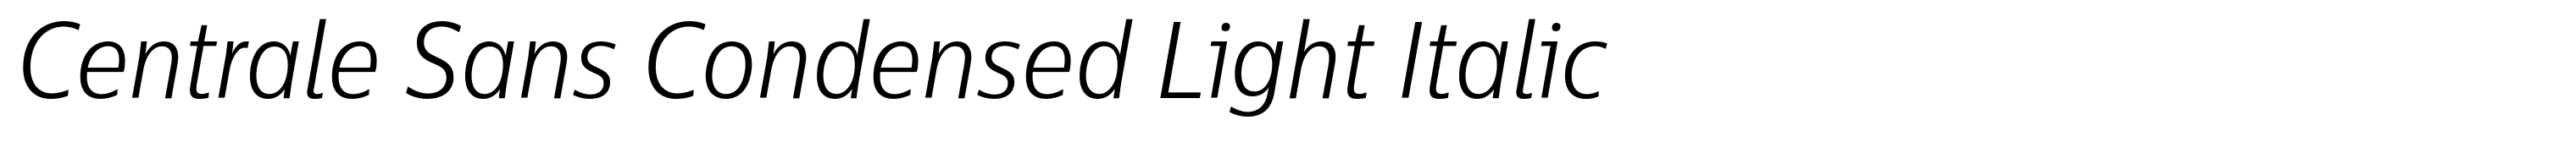 Centrale Sans Condensed Light Italic